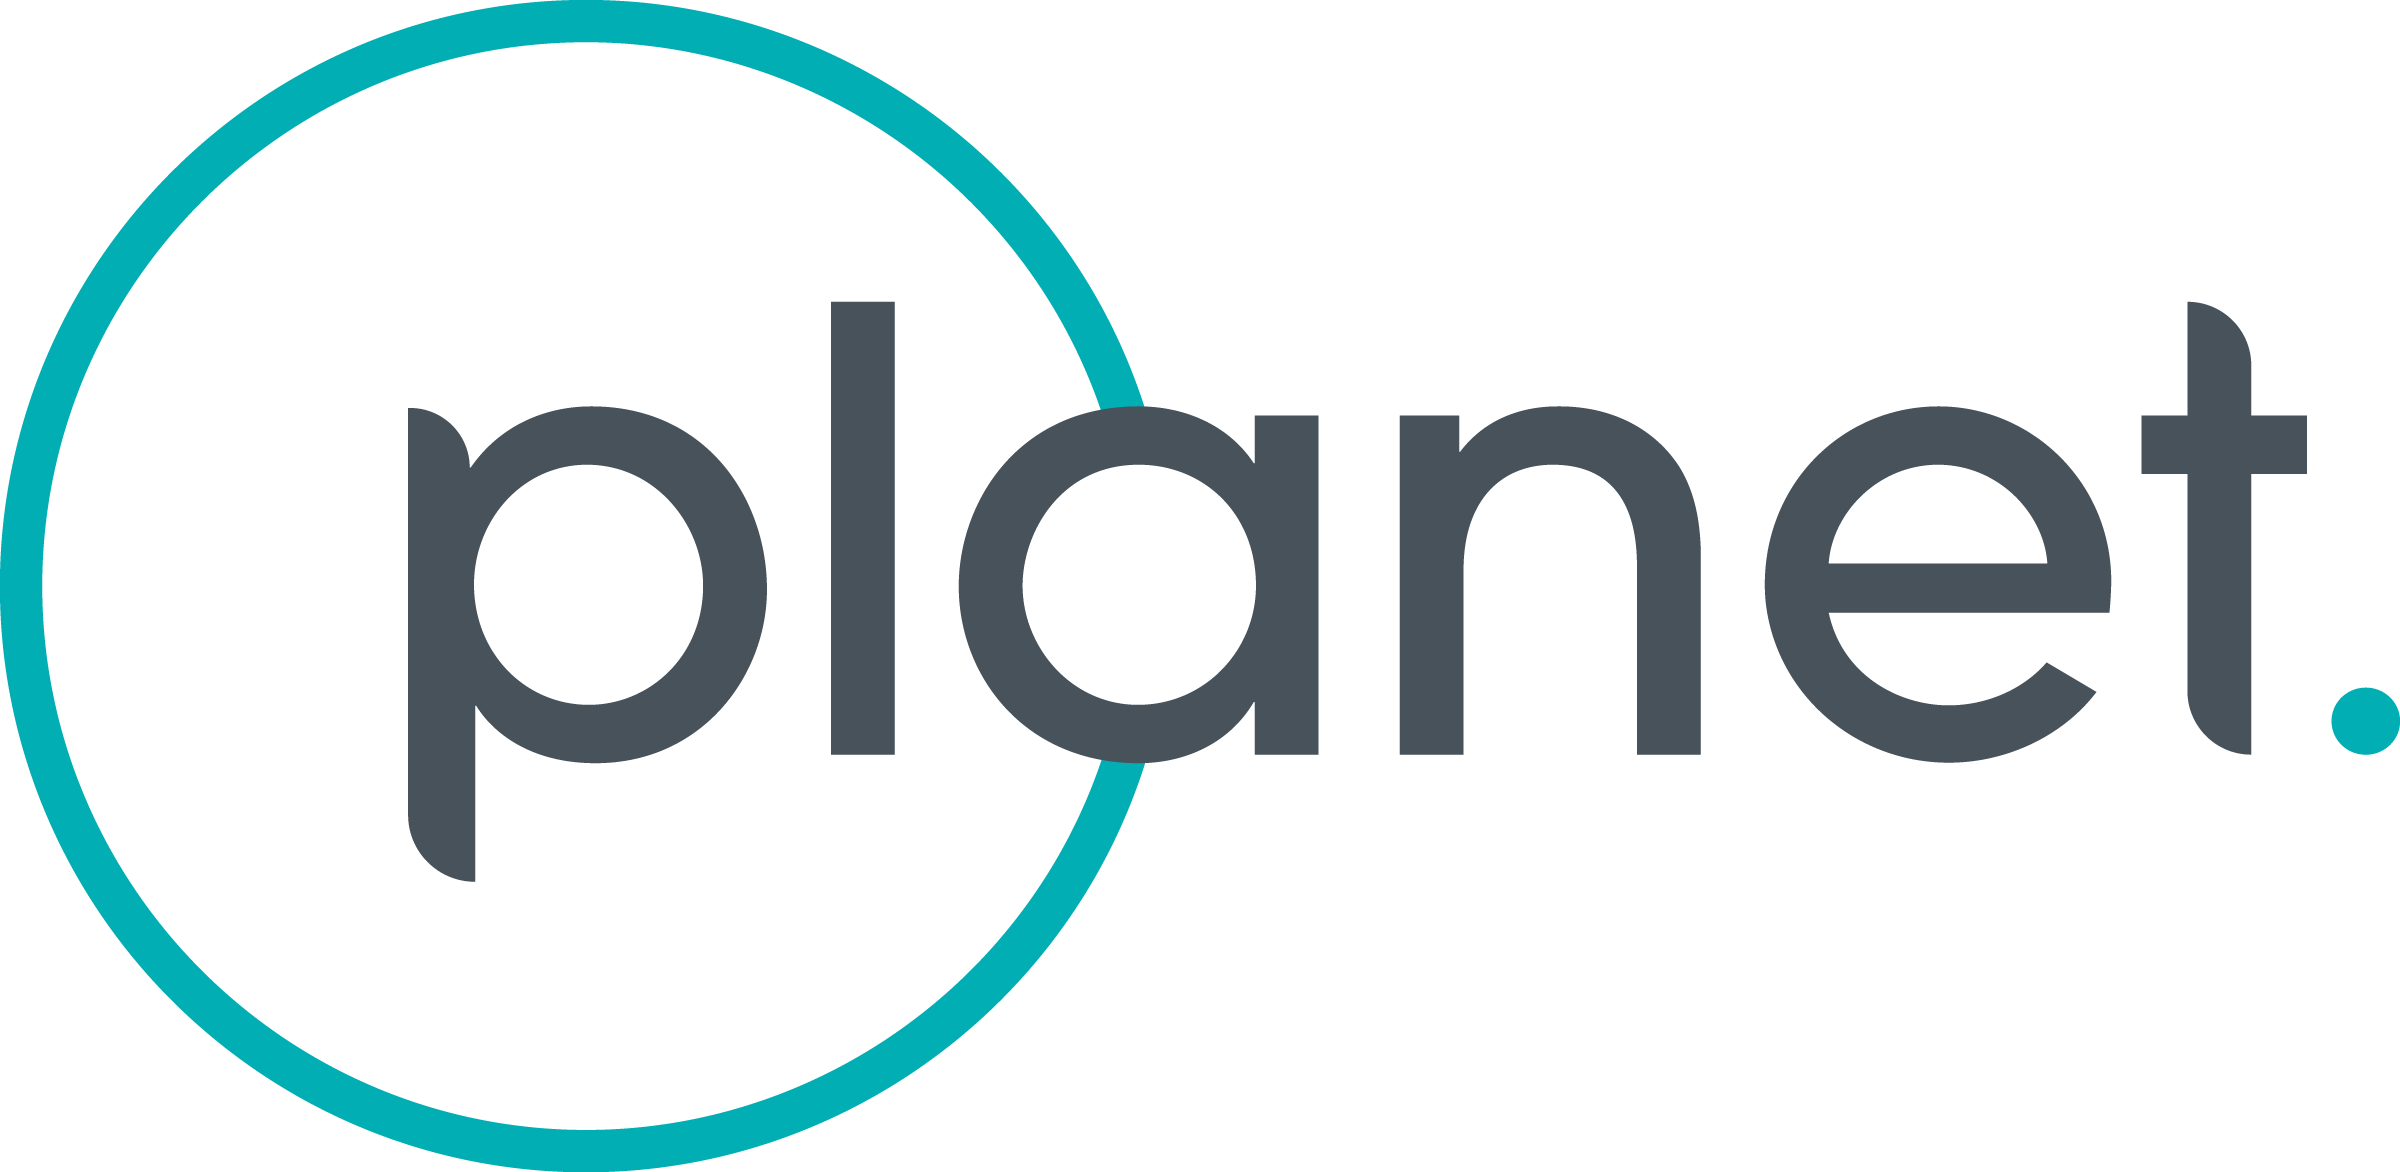 Planet Logo - Planet logo New.png